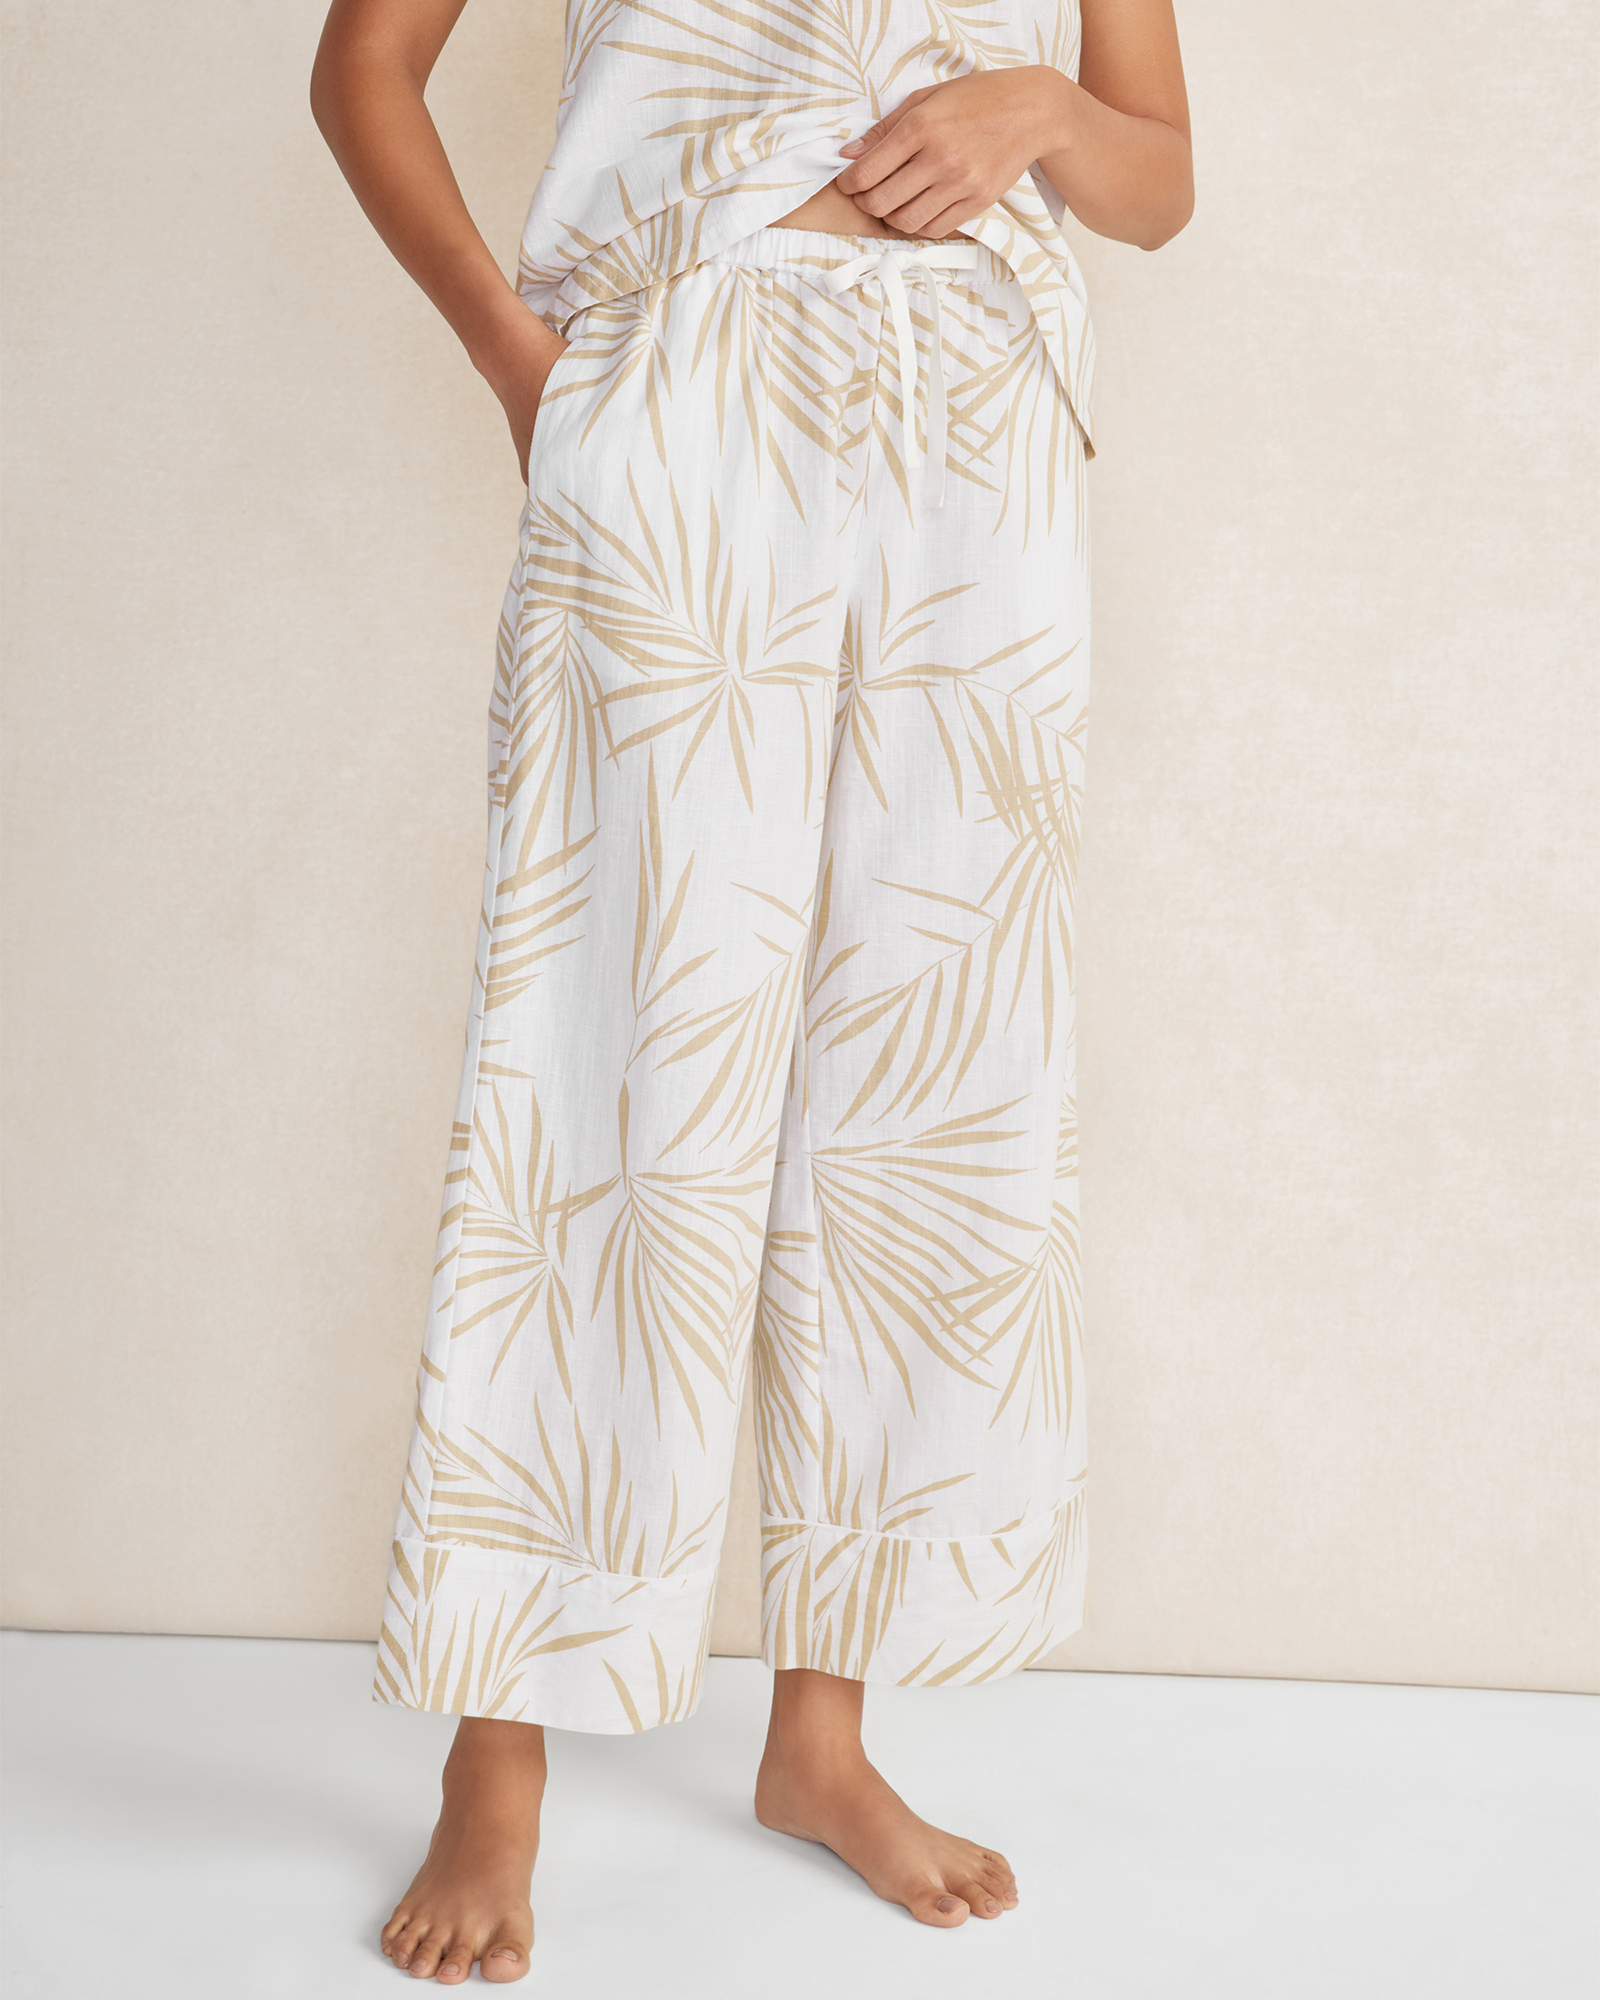 Talbots Organic Cotton Linen Palm Print Pajama Pants - White/sepia - Xxl